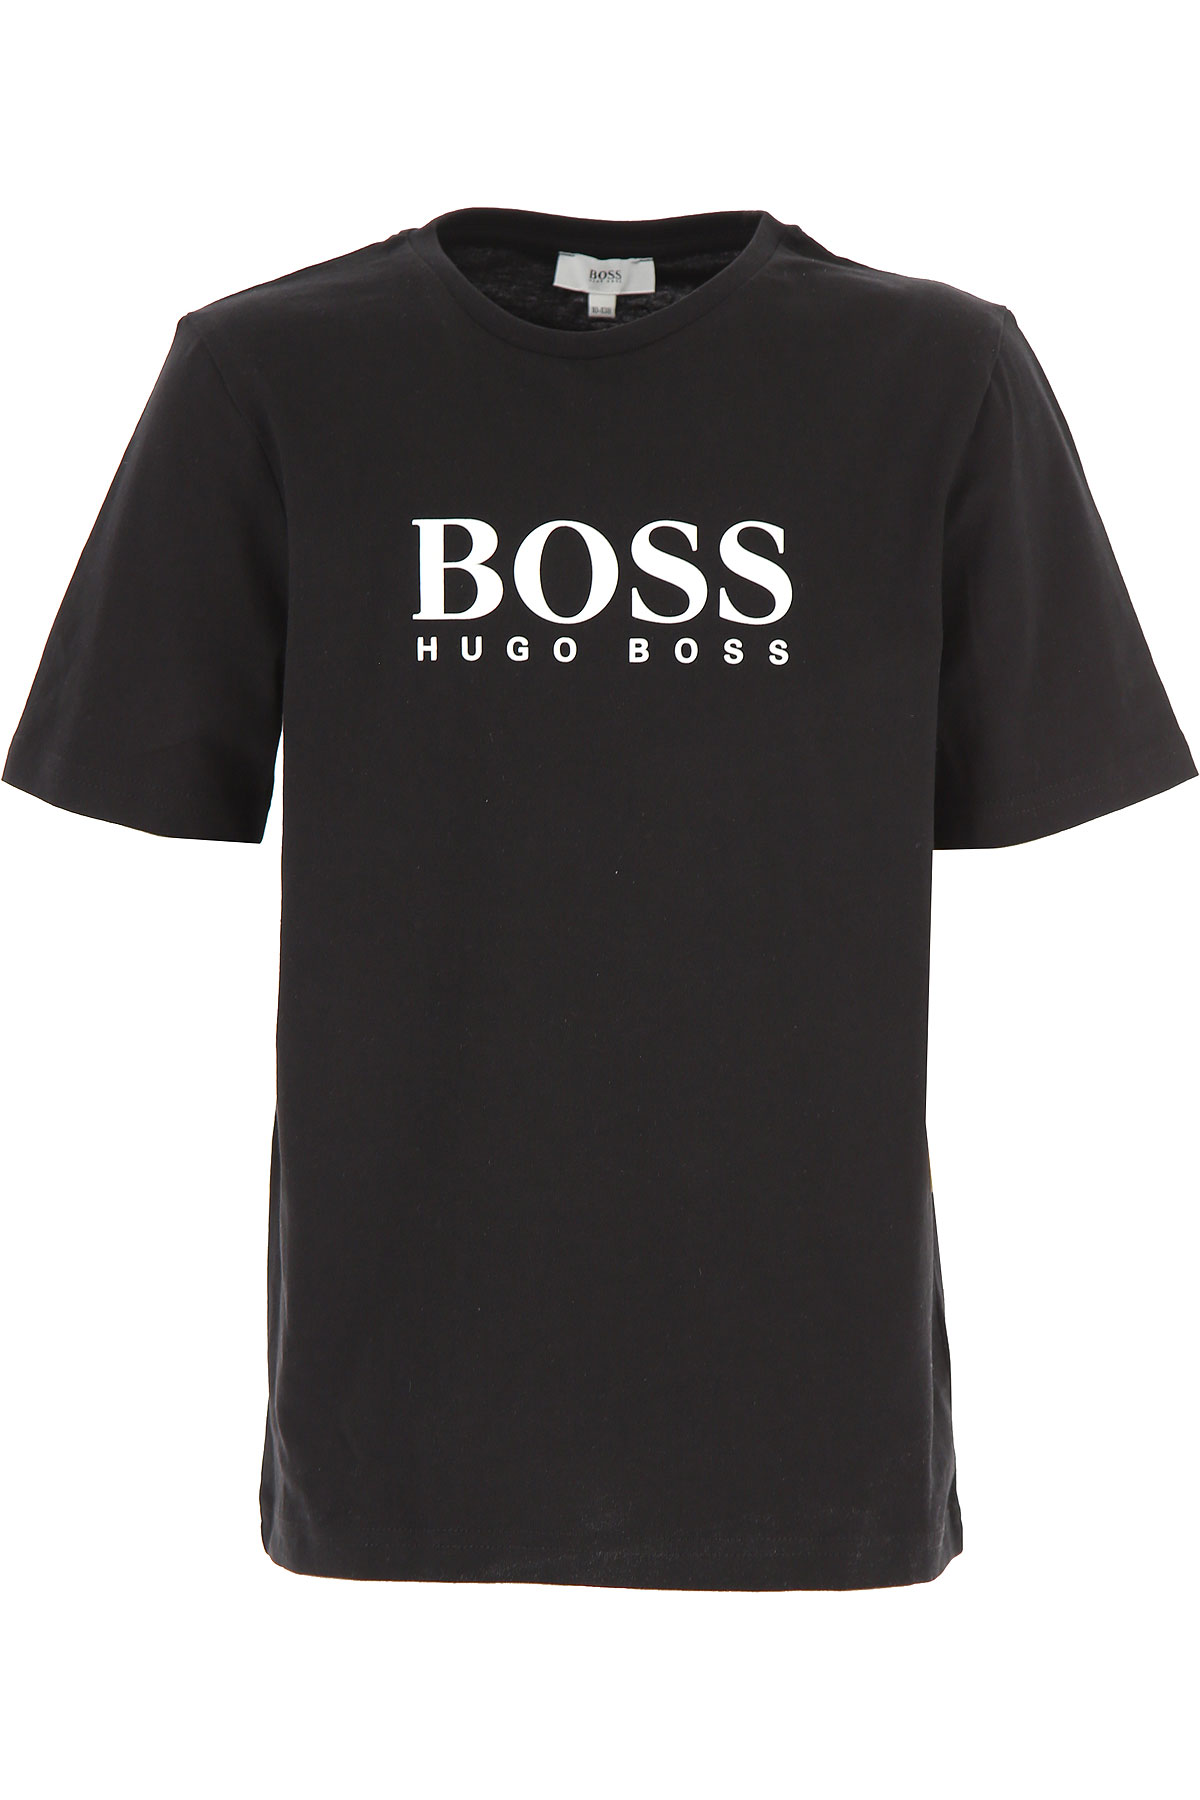 Kidswear Hugo Boss, Style code: j25p13-09b-